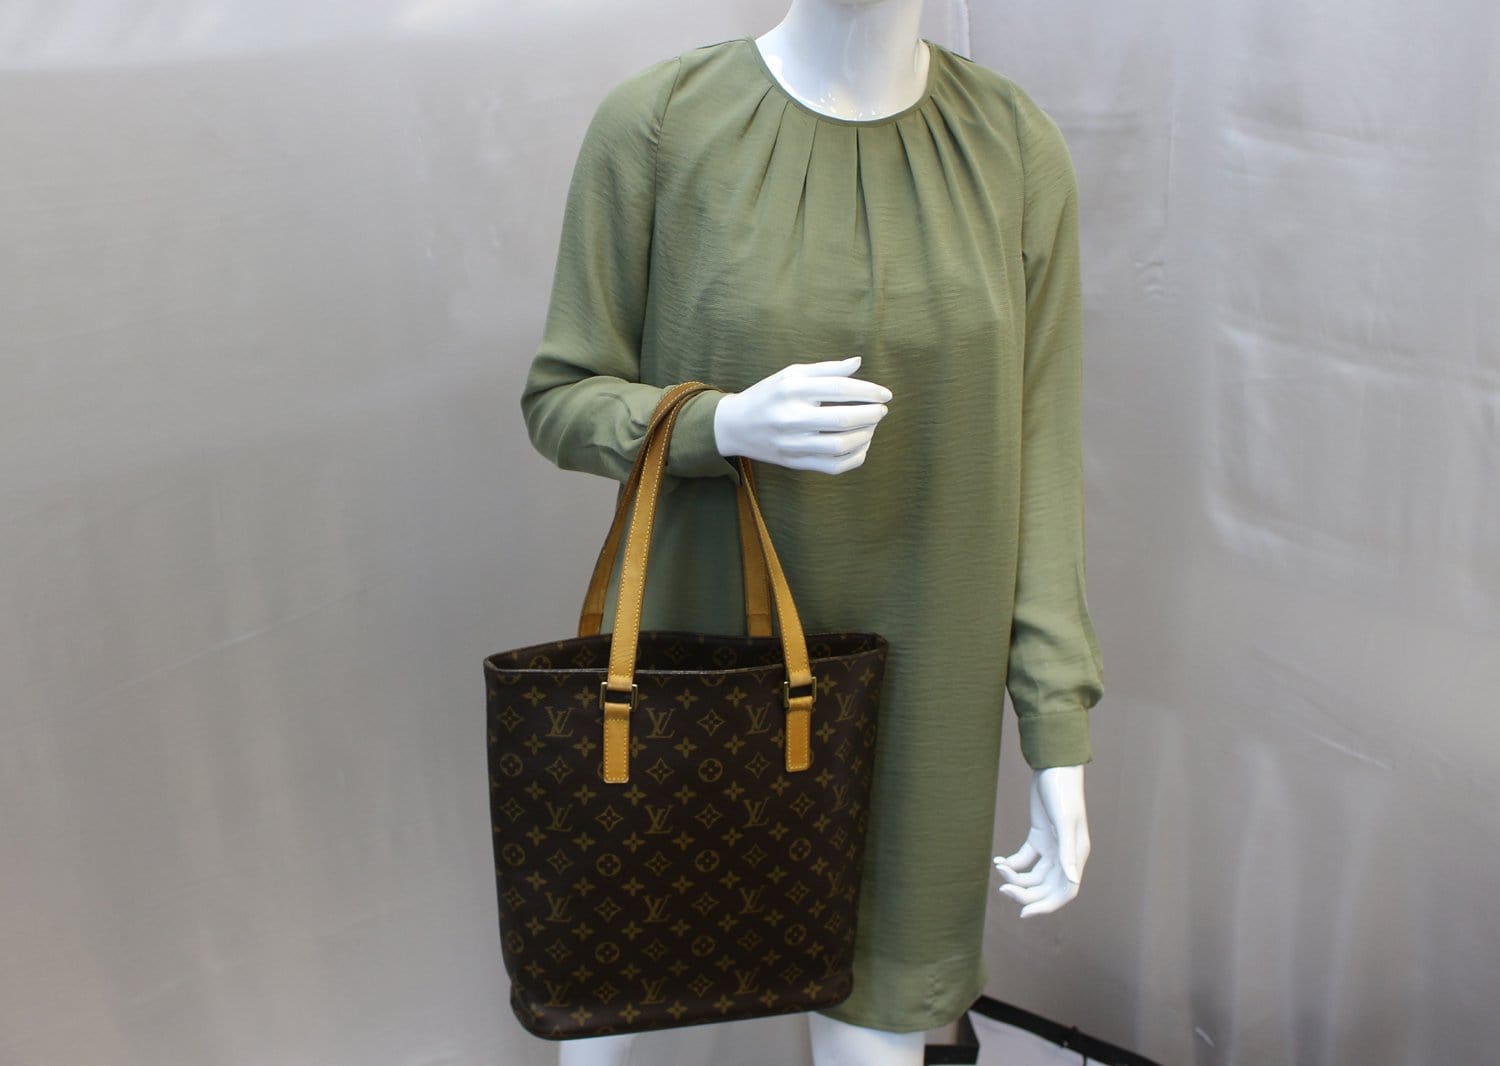 LOUIS VUITTON Louis Vuitton Vavin GM Tote Bag M51170 SR0032 Brown Monogram  Women's